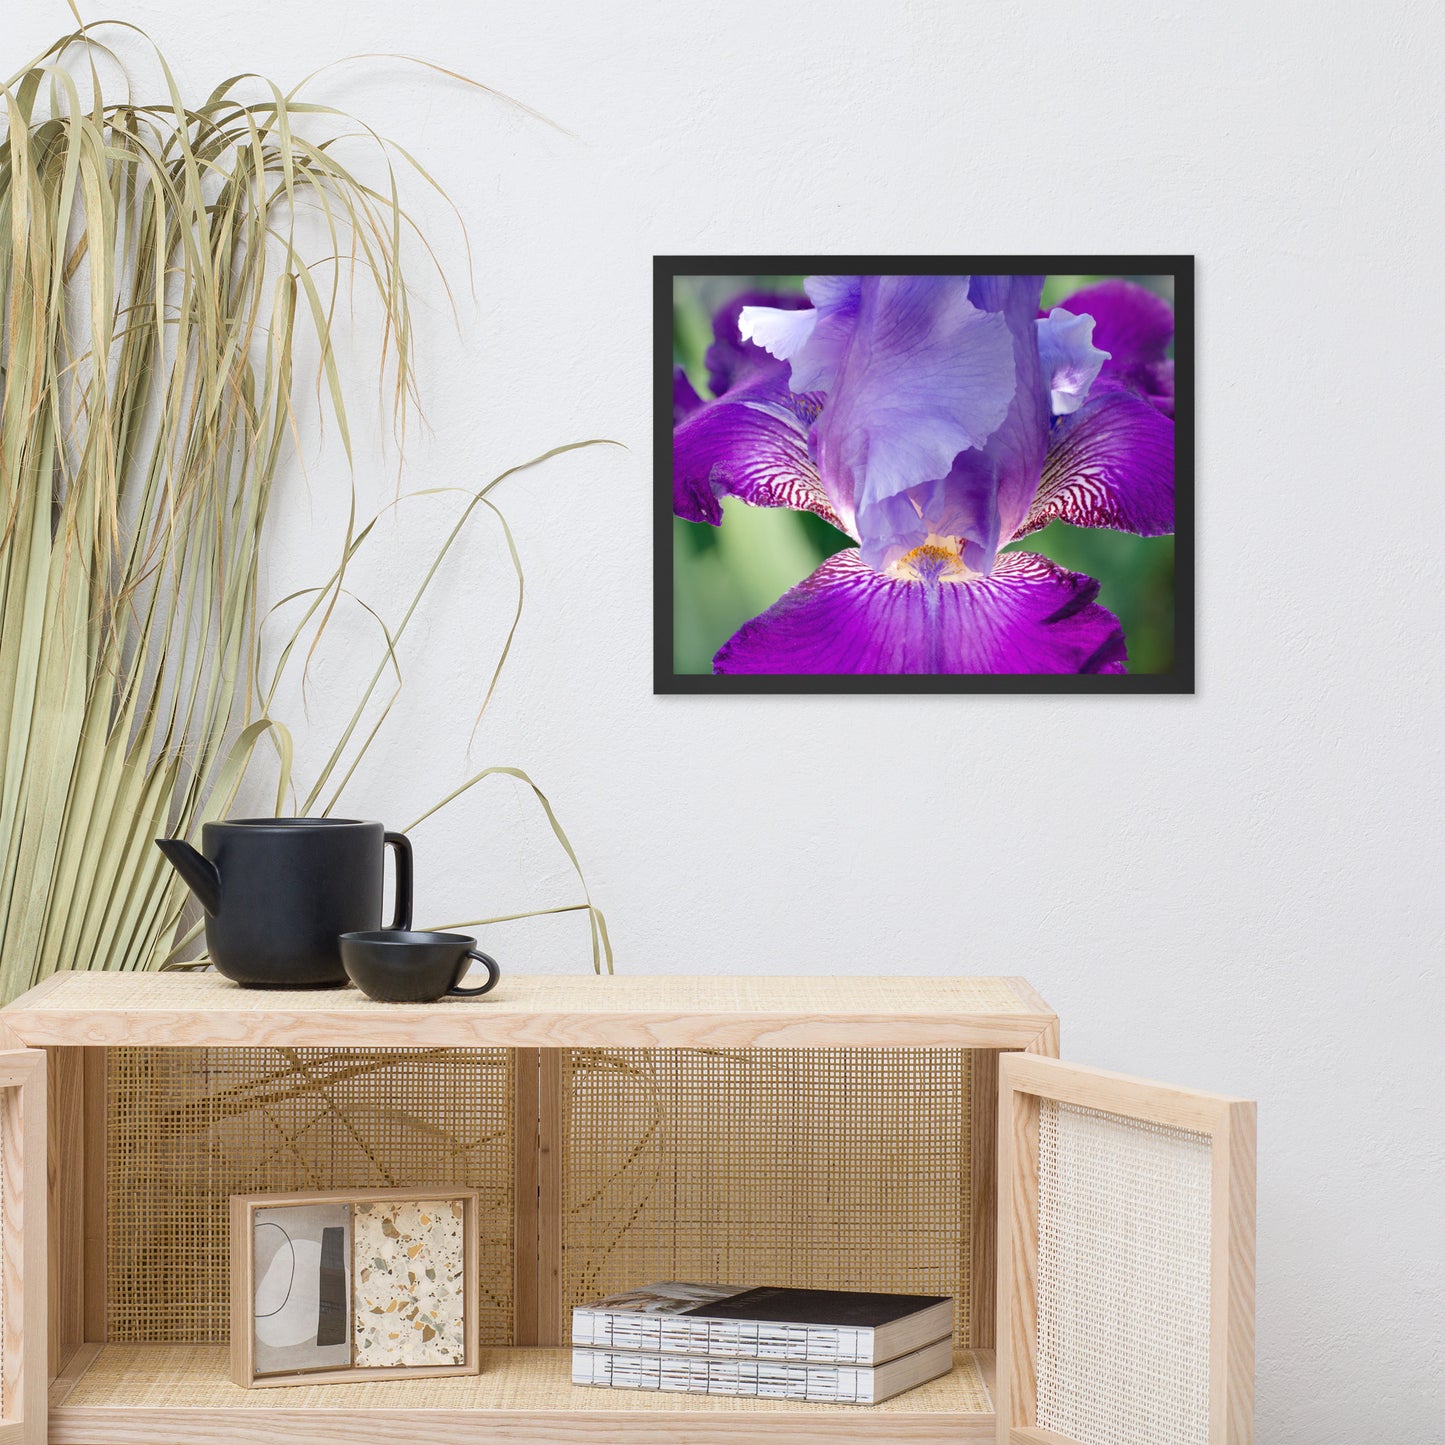 Large Print Above Bed: Glowing Iris - Floral / Botanical / Nature Photo Framed Wall Art Print - Artwork - Wall Decor - Modern Home Decor